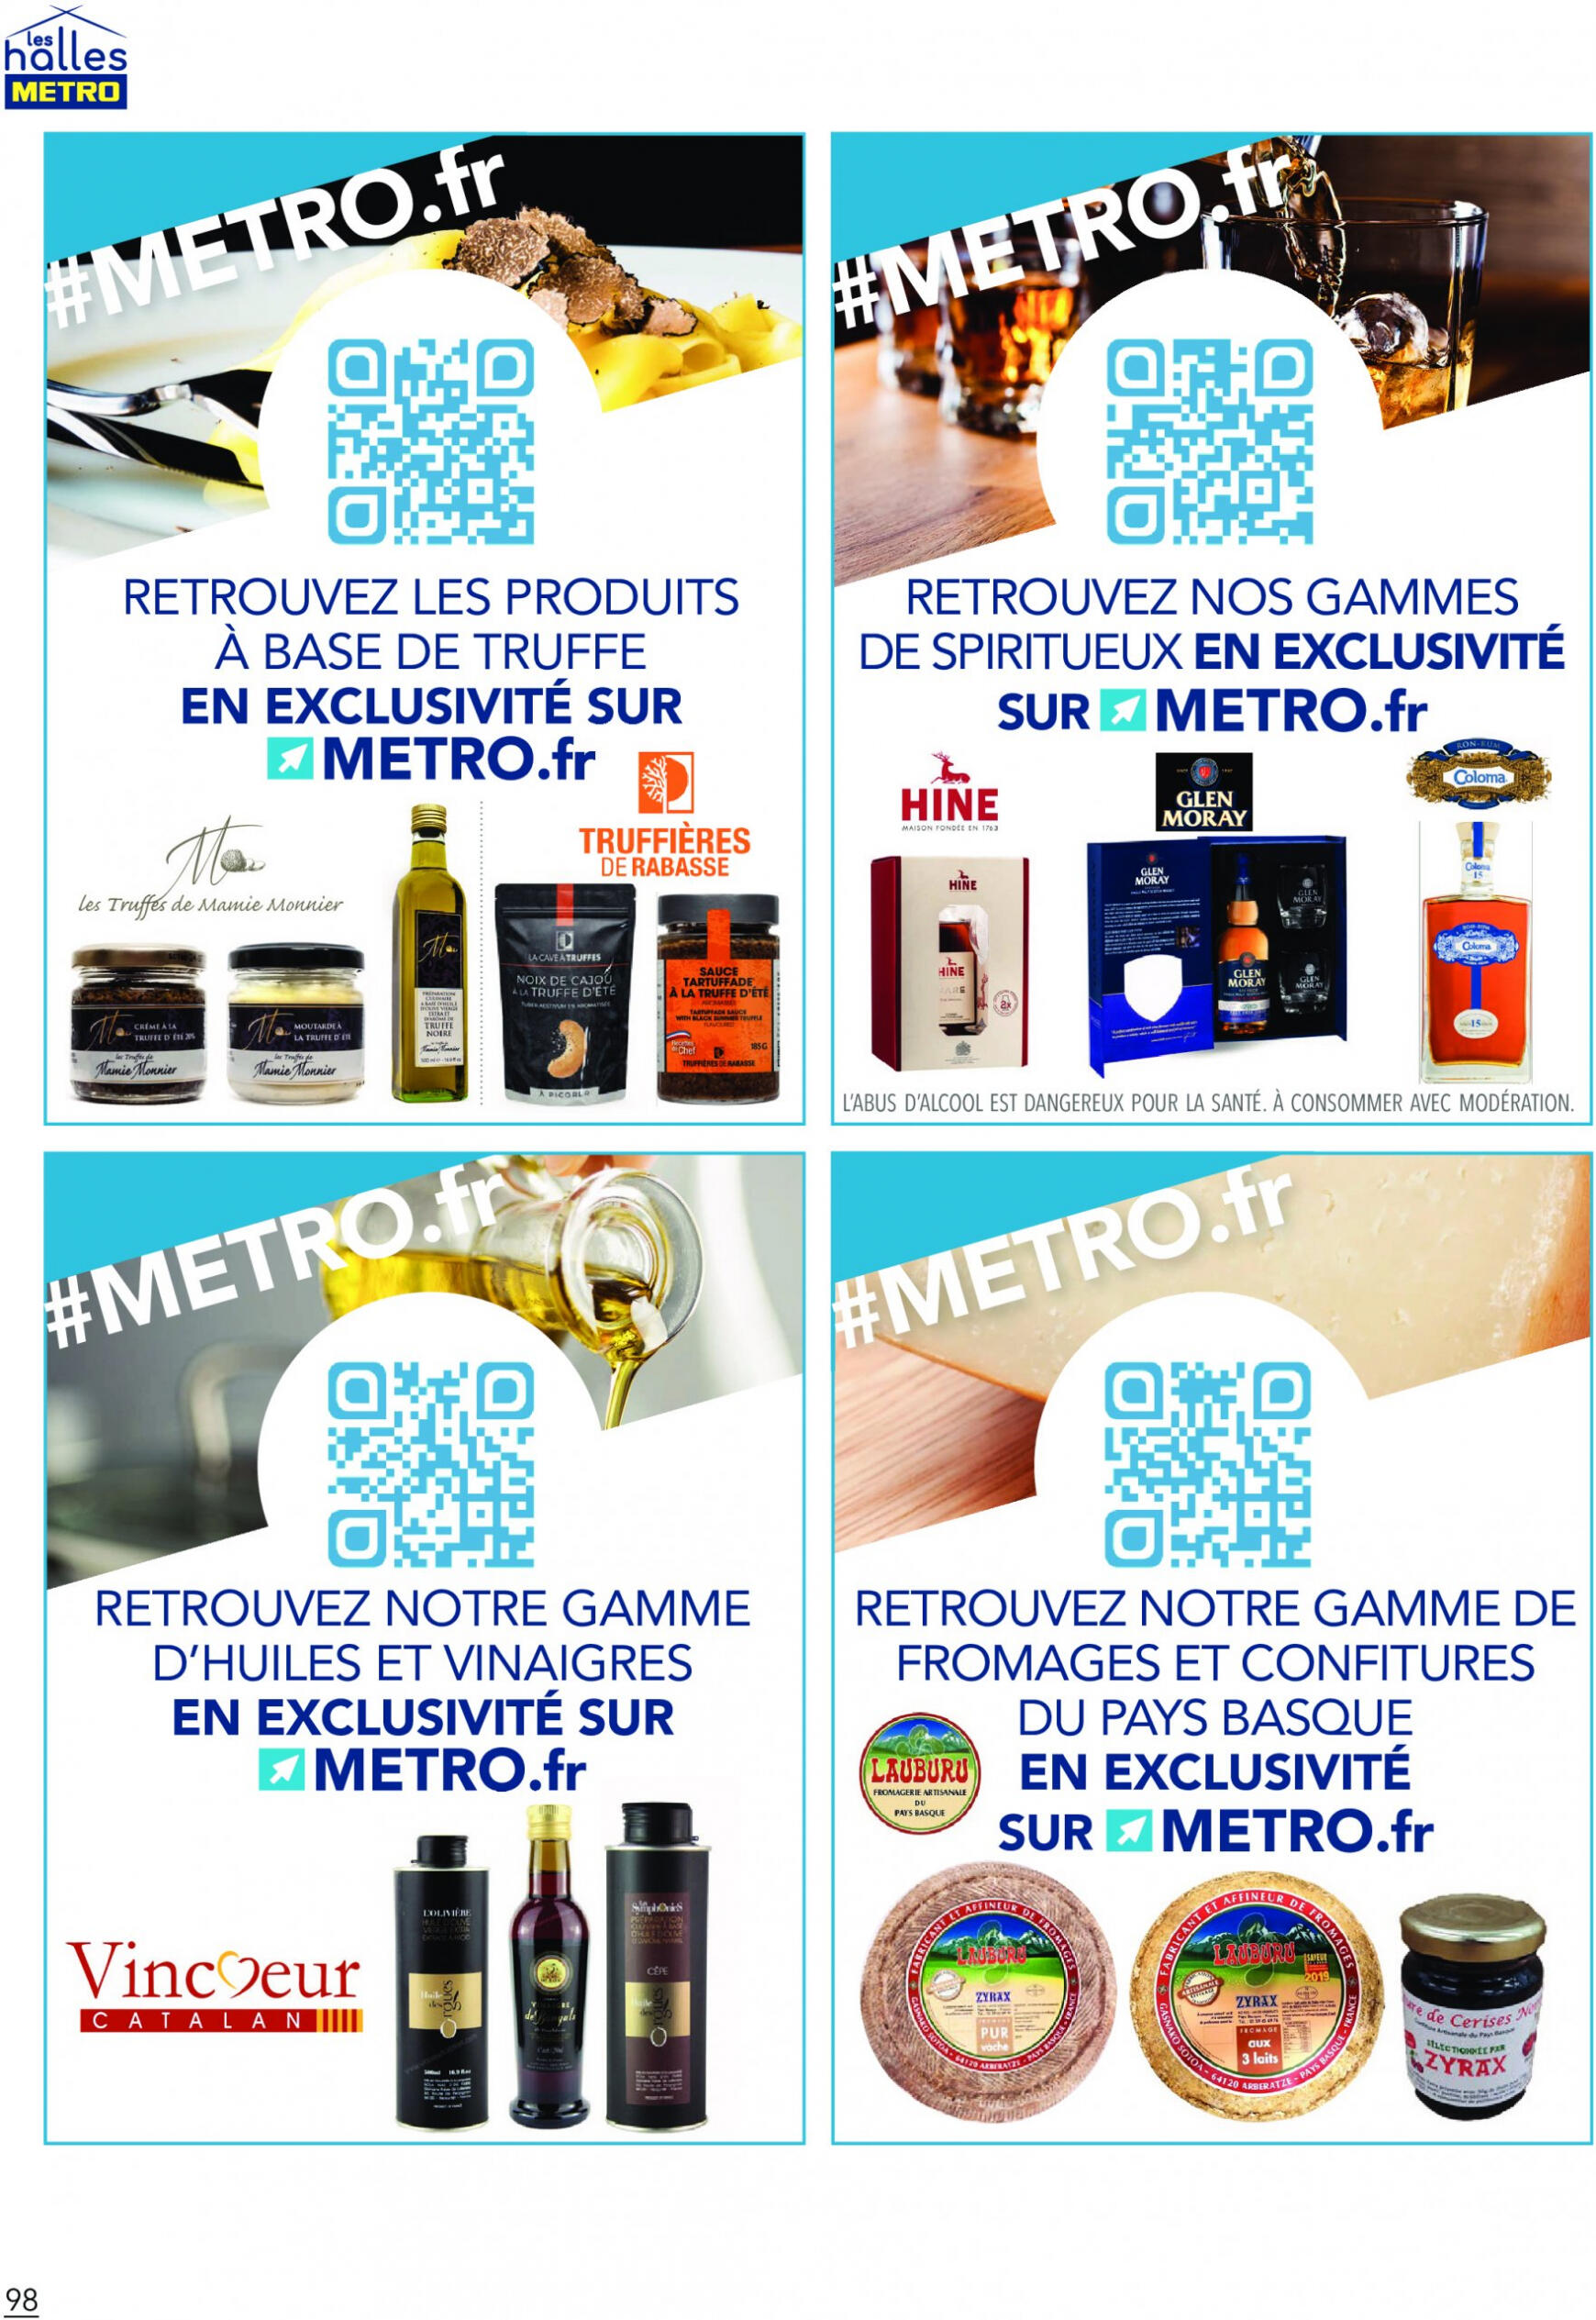 metro - Metro - Guide bistronomie - page: 98